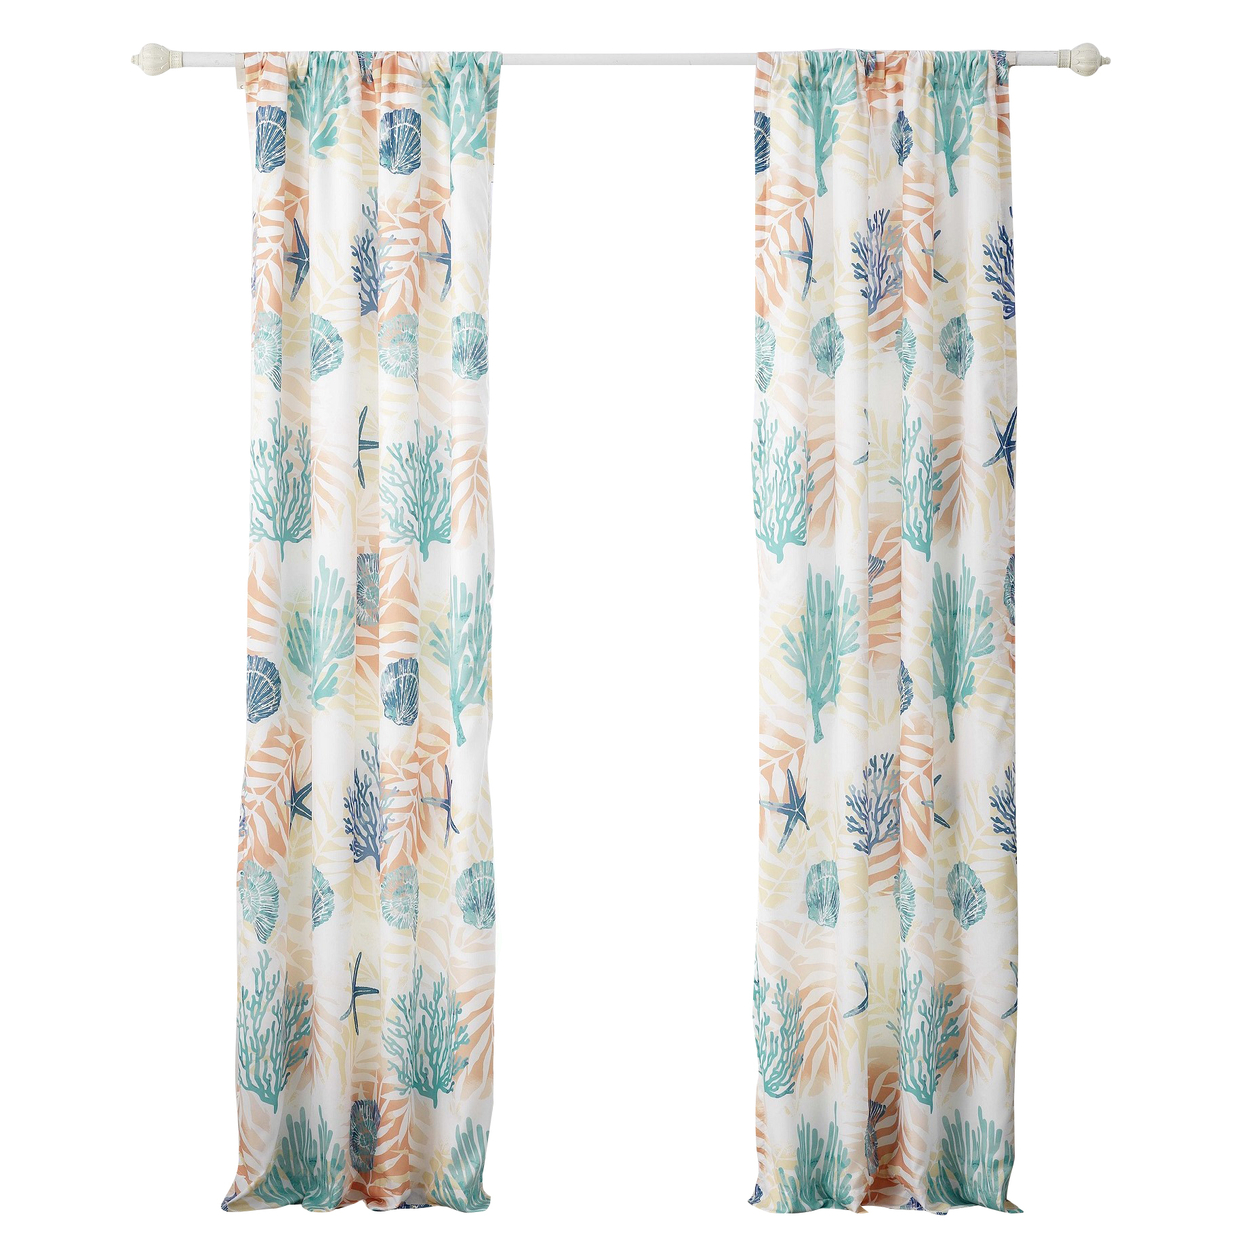 Geo 84 Inch Window Curtains, White Blue Polyester, Seashells Ferns Print